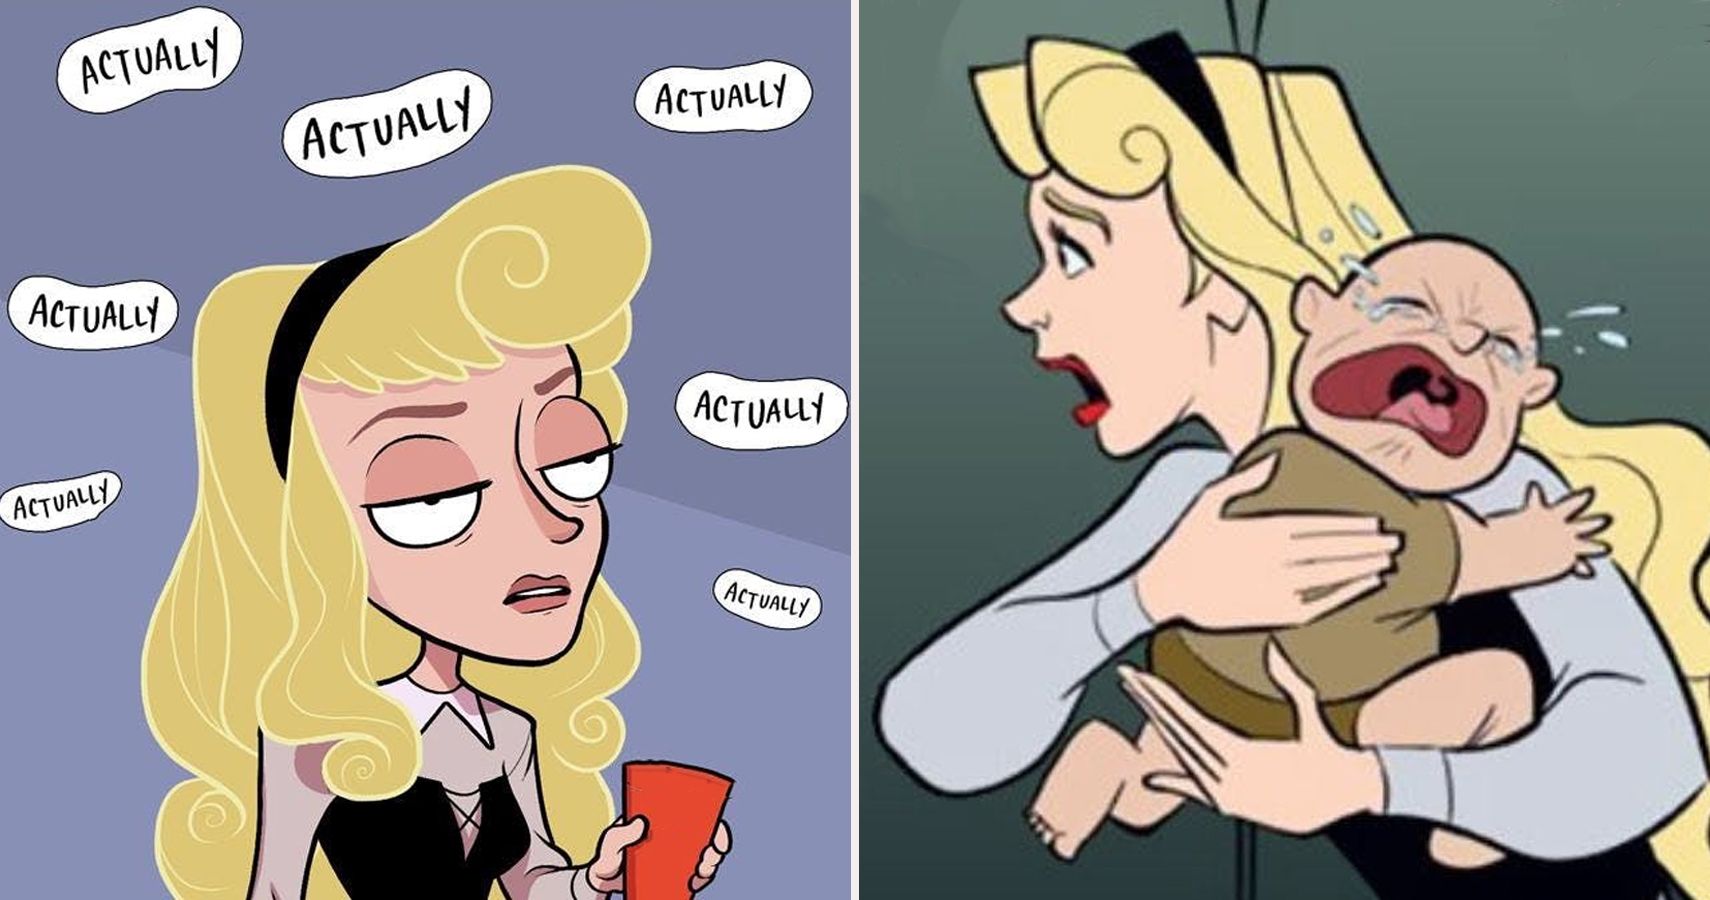 29 Hilarious Disney Princess Comics That Change The Way We